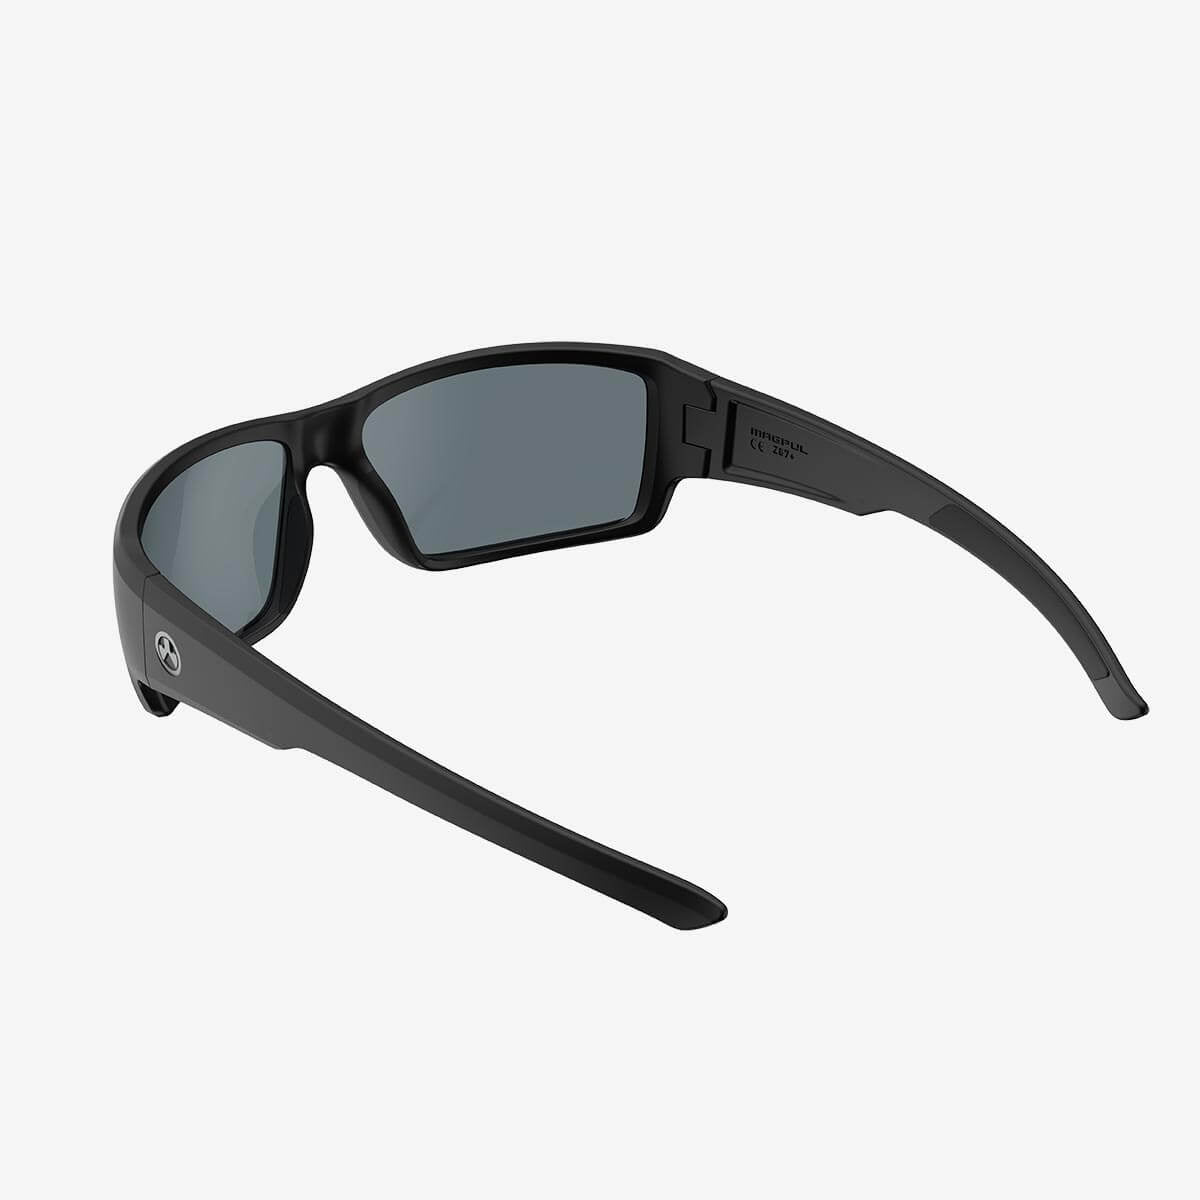 Magpul - Ascent Eyewear - Black Frame, Gray Lens